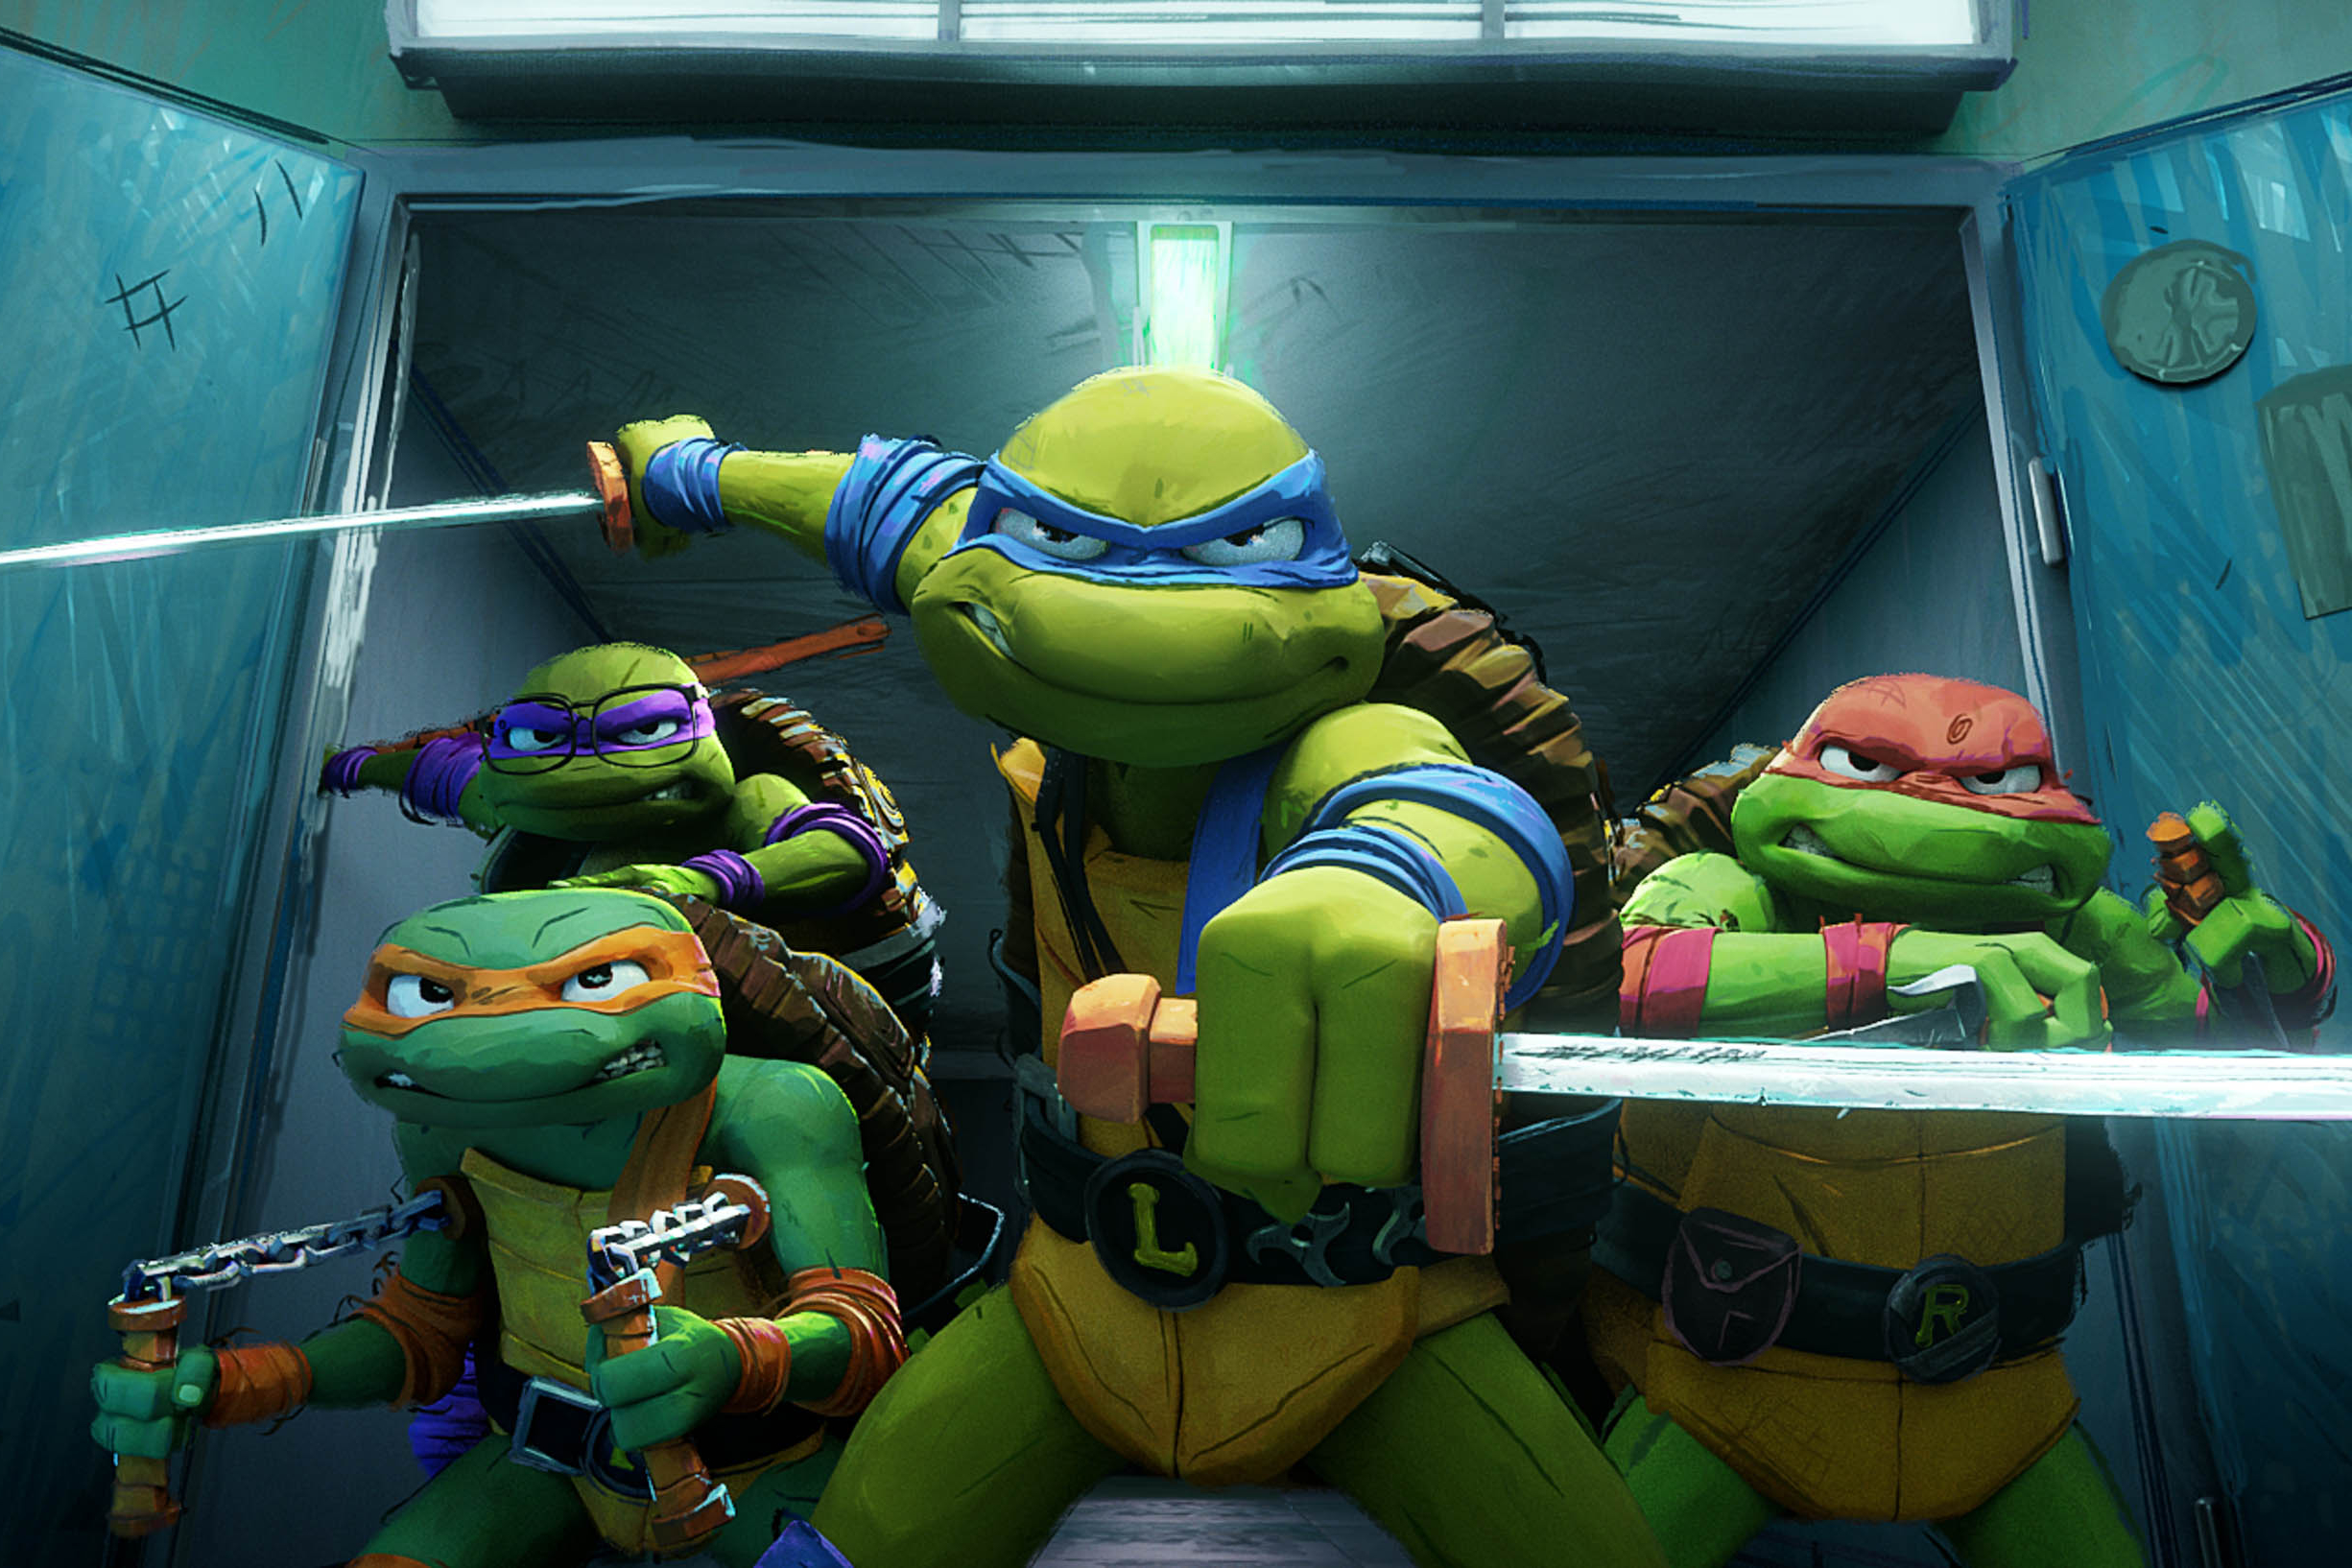 Teenage Mutant Ninja Turtles: Mutant Mayhem: Video Review